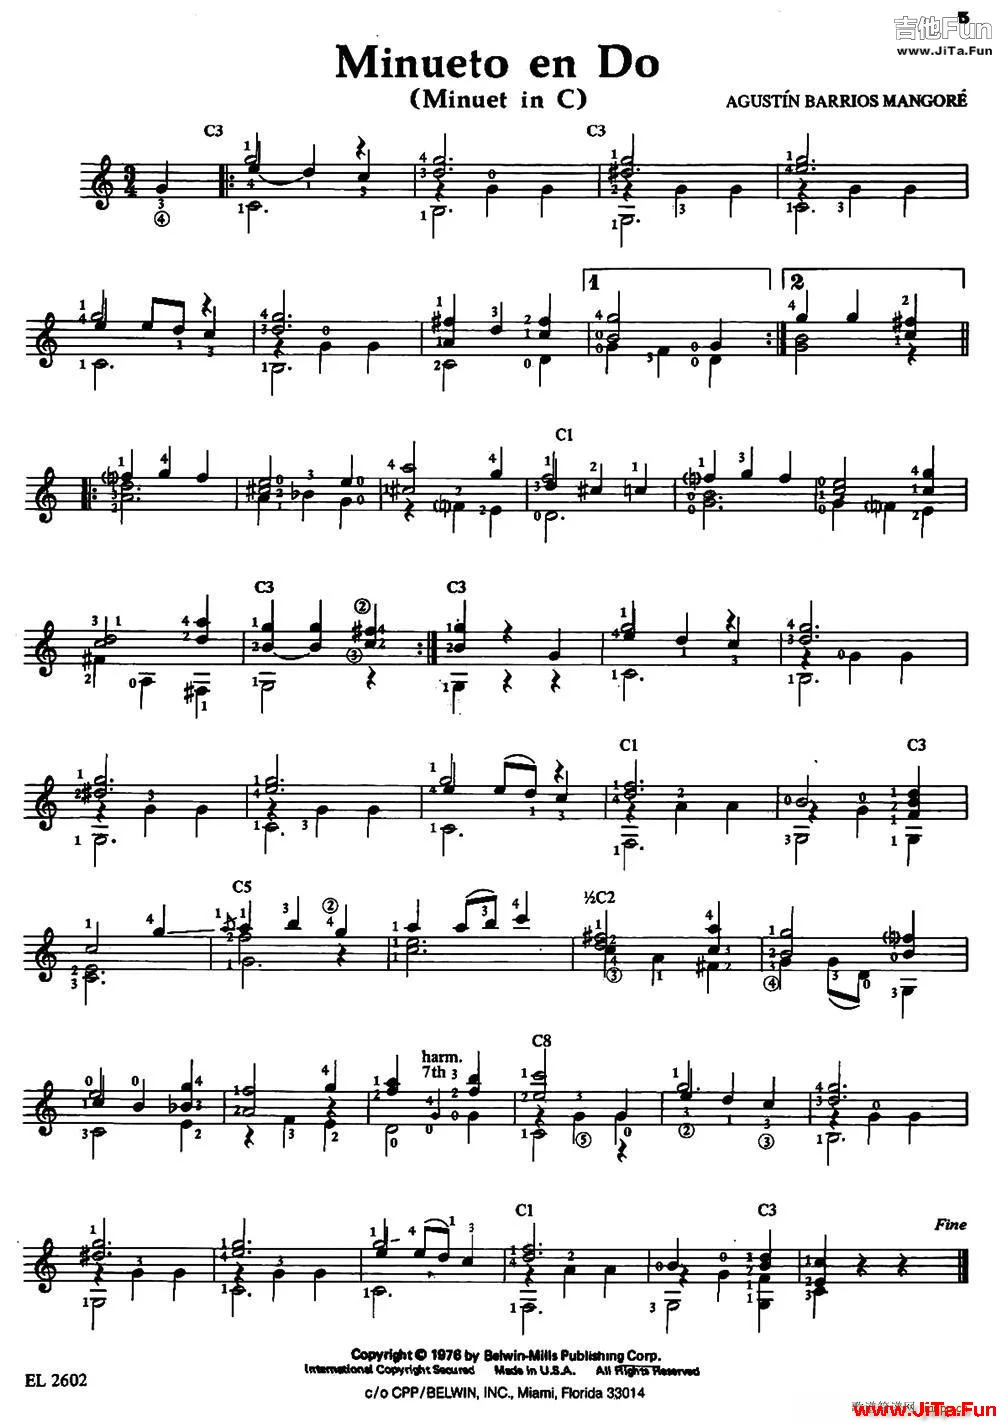 Minueto en Do 古典吉他(吉他譜)1